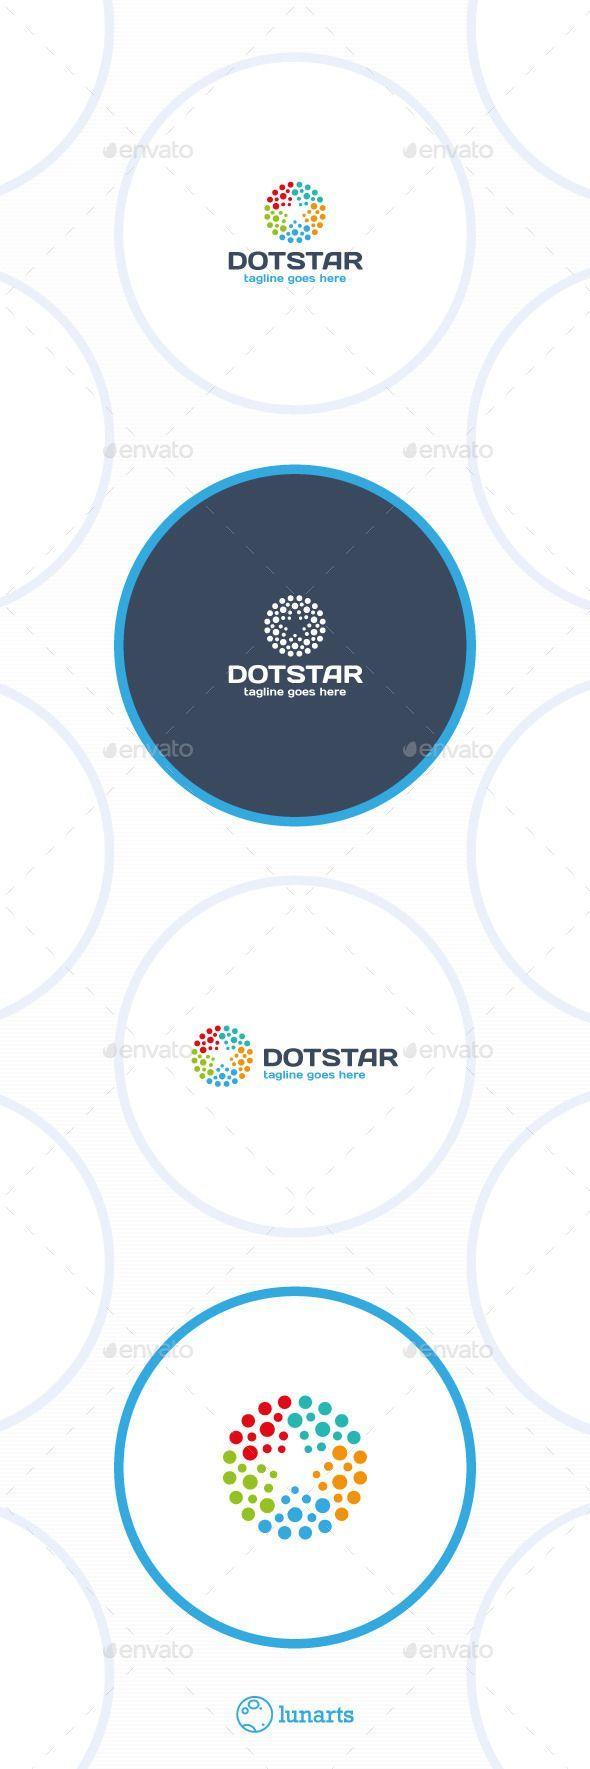 Spiral Colored Dots Logo - Pin by Amr Feroon on Logo design | Pinterest | Logos, Symbol logo ...